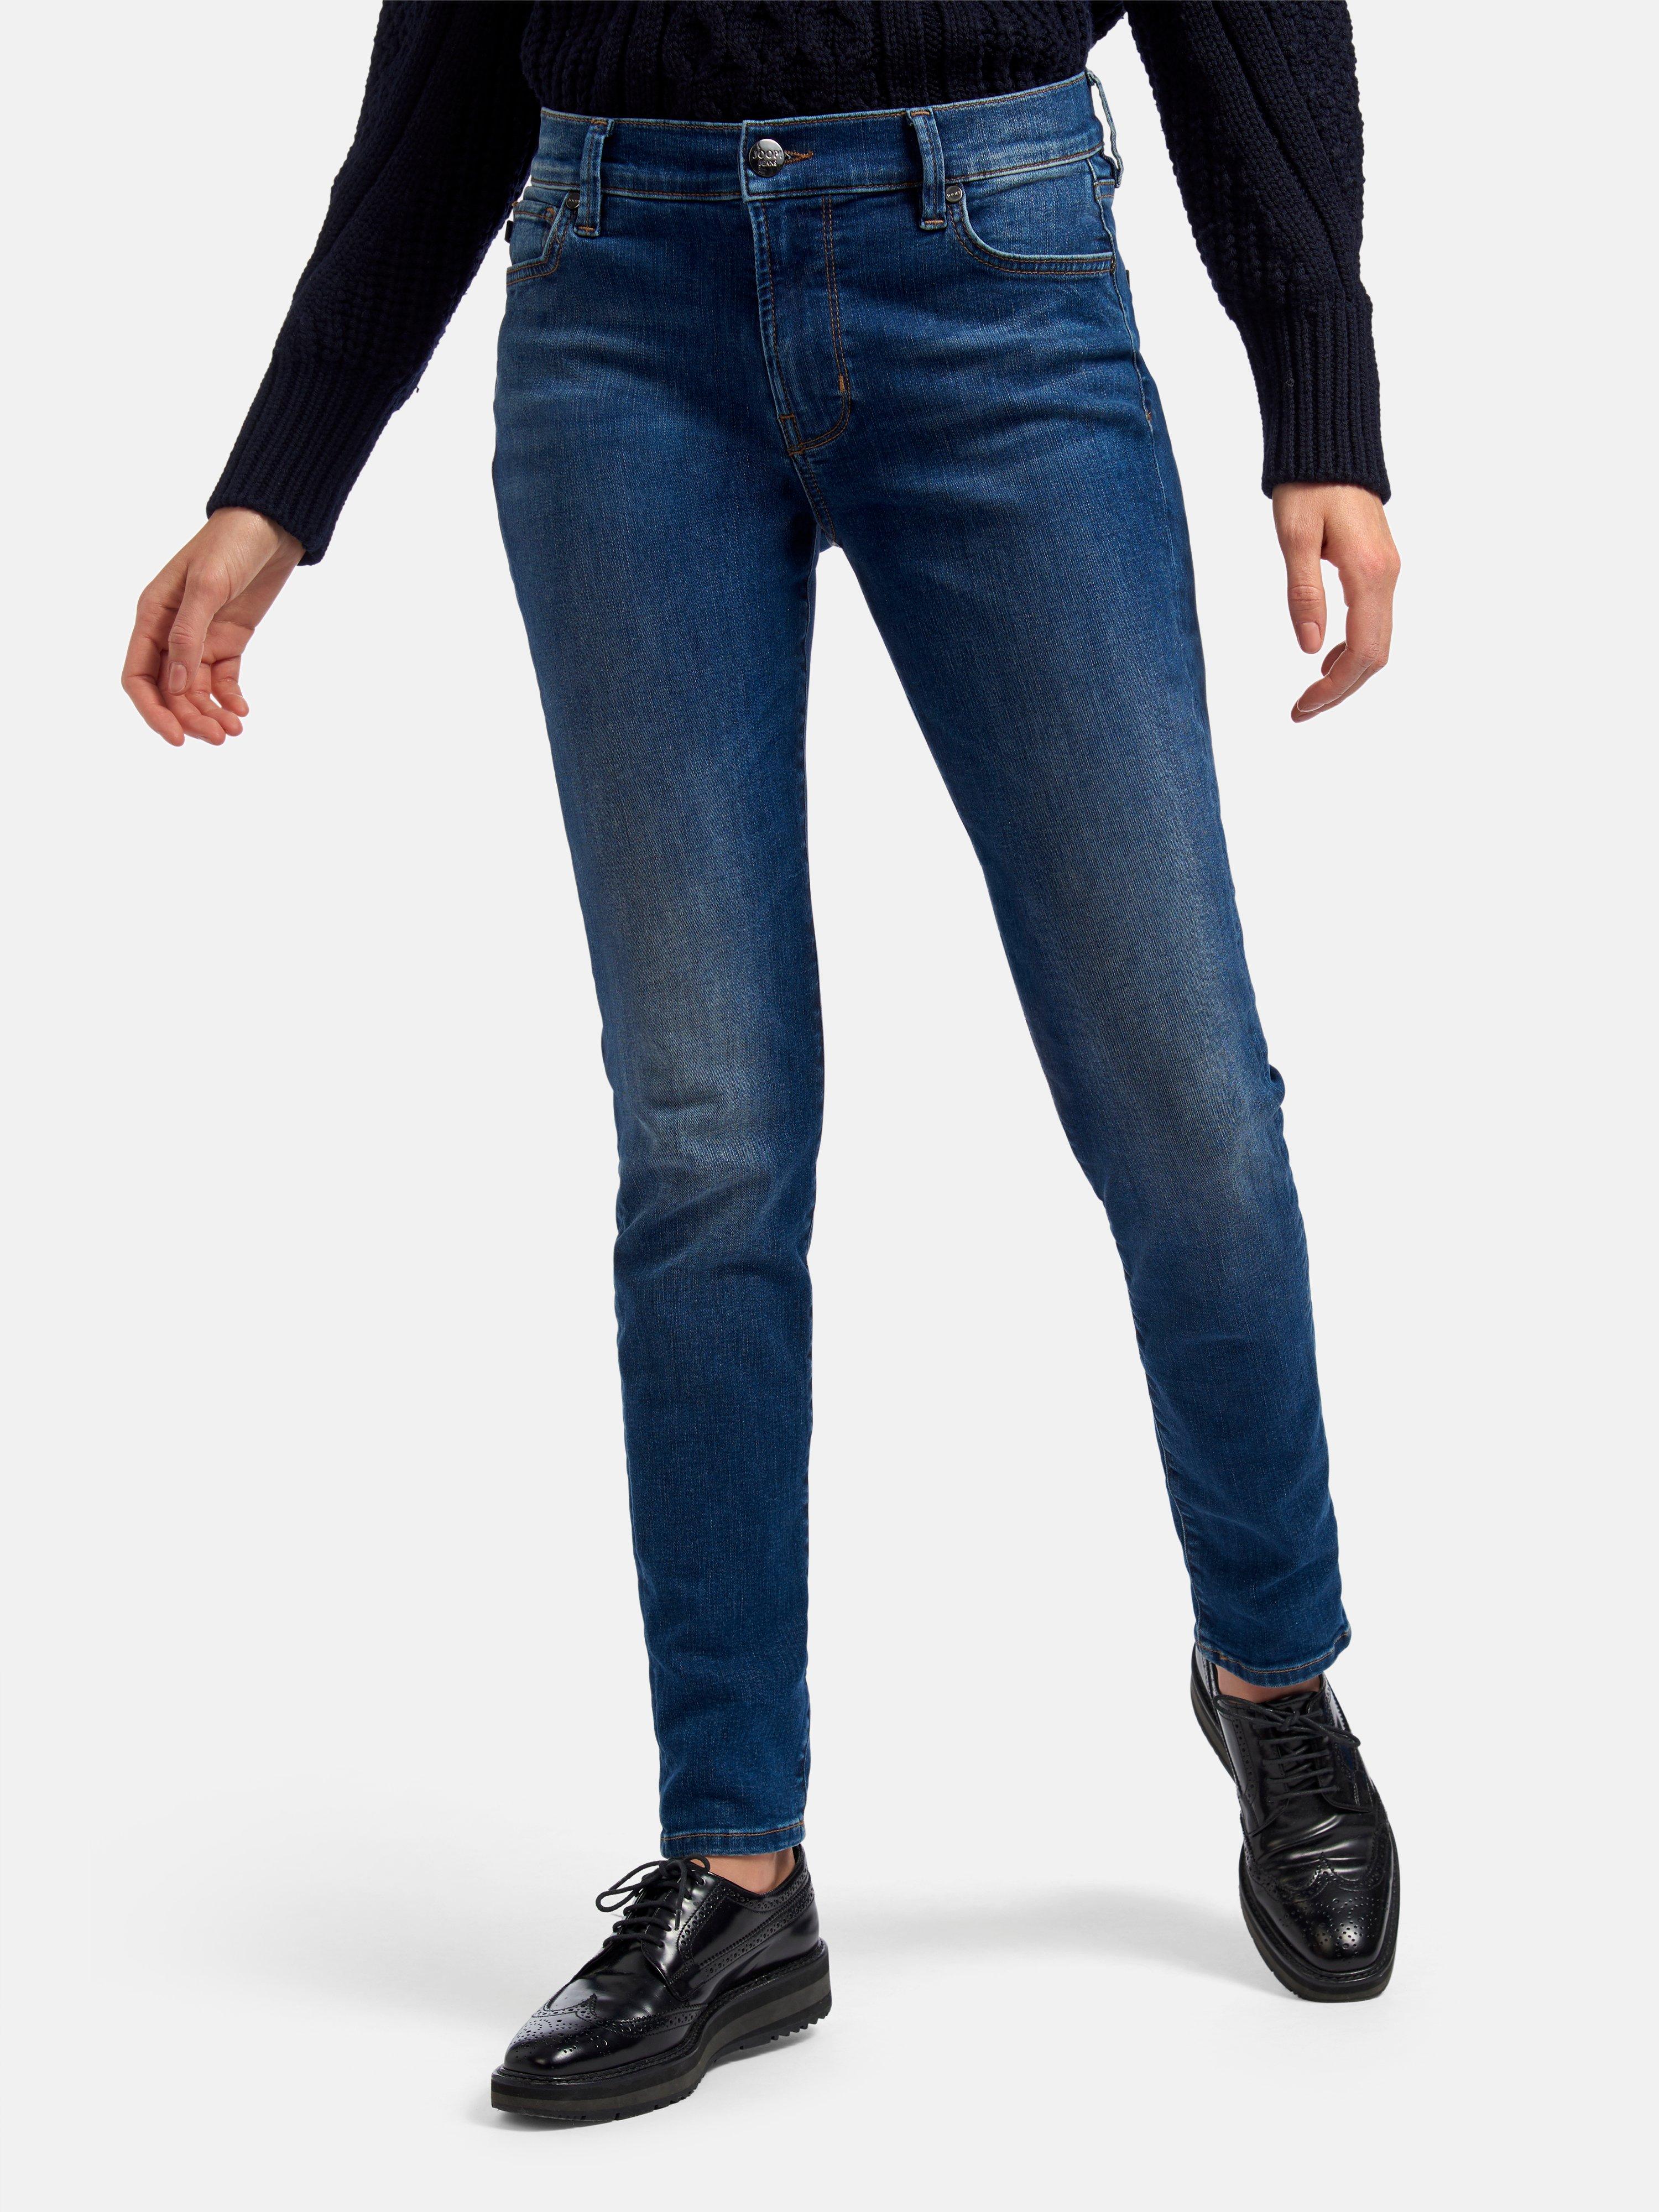 Joop! - Ankle-length blue denim jeans - Fit Slim